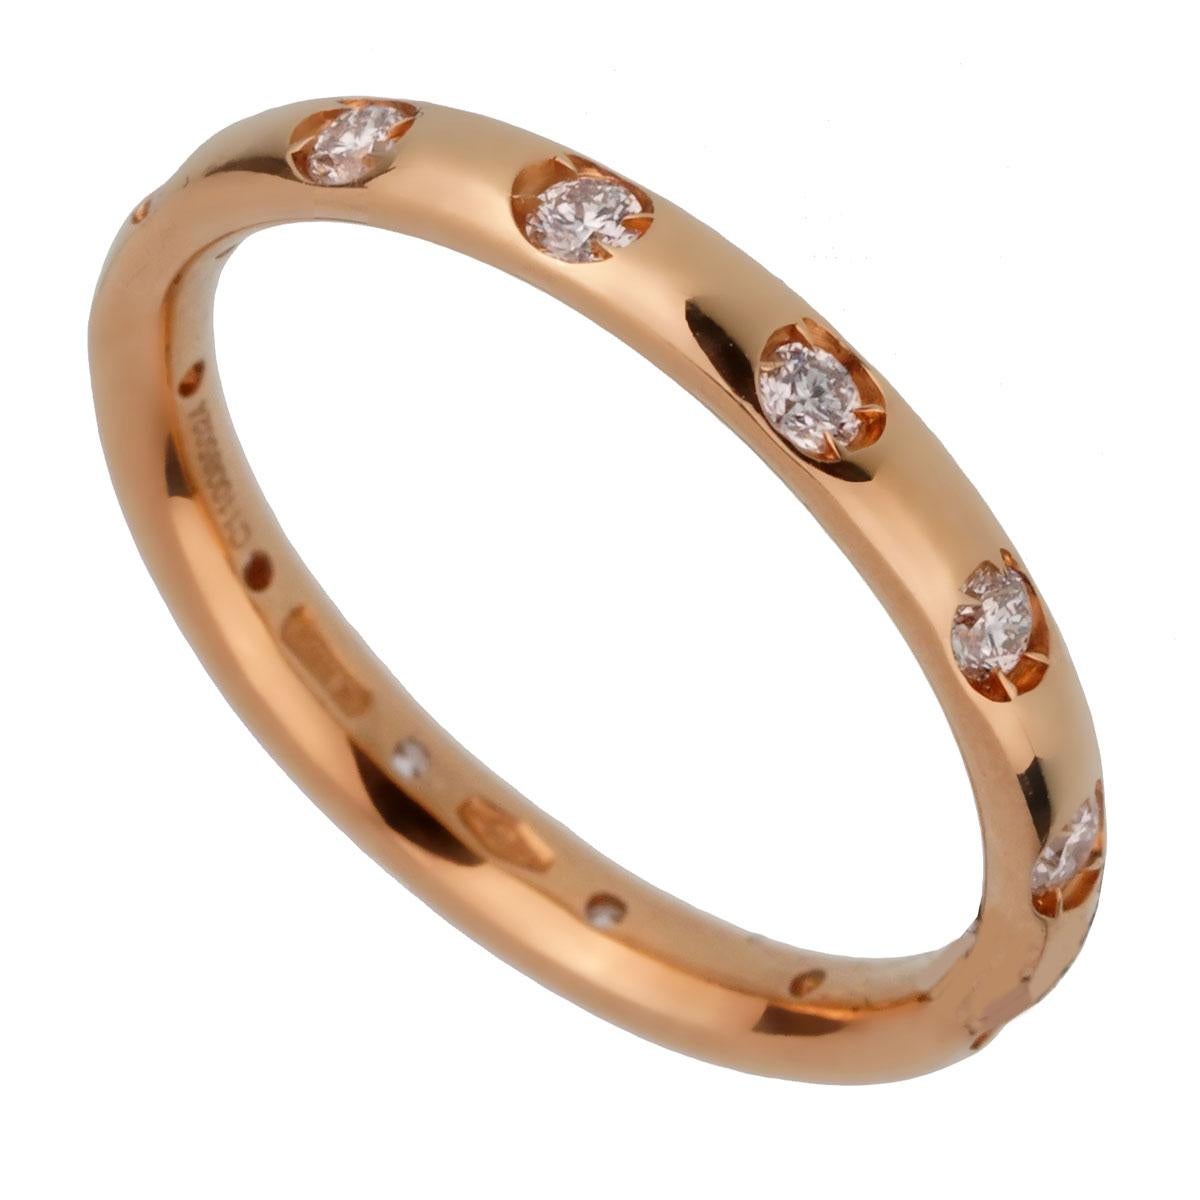 A chic brand new Pomellato diamond ring adorned with round brilliant cut diamonds in 18k rose gold. The ring measures a size 5 1/2

Pomellato Retail Price: $2500
Sku: 2346